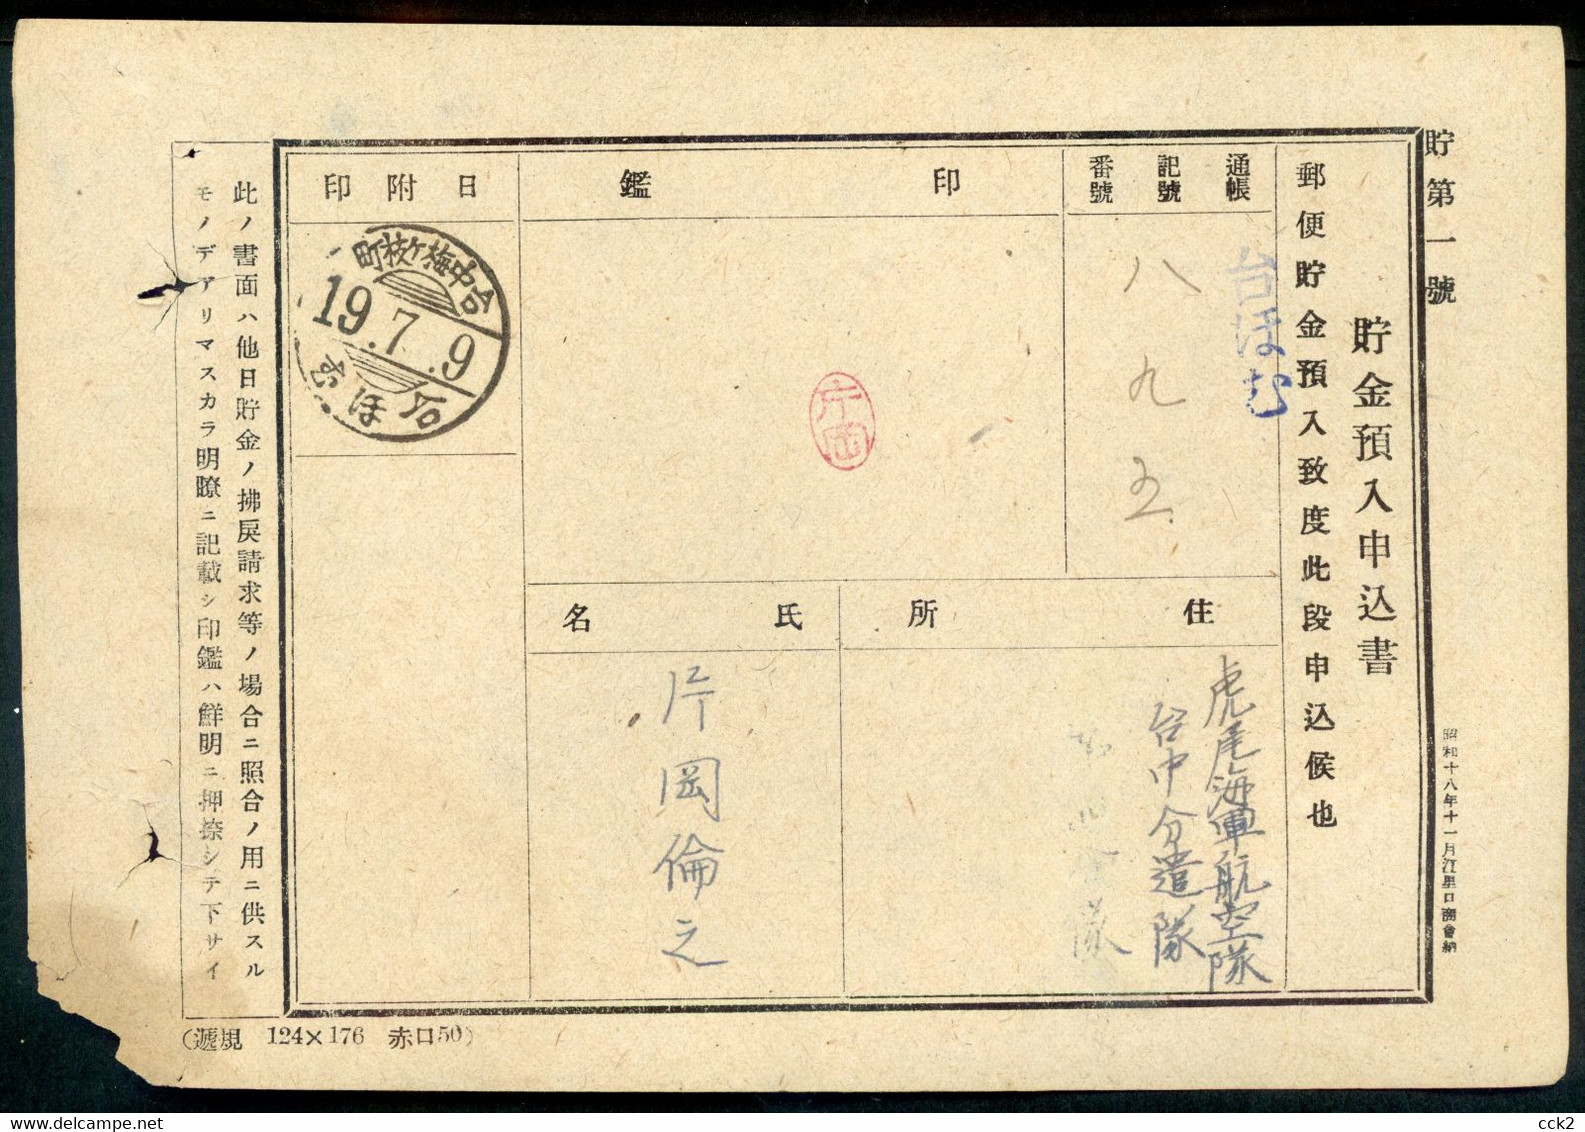 JAPAN OCCUPATION TAIWAN- Postal Convenience Savings Fund Advance Deposit Application Form (2) - 1945 Japanse Bezetting